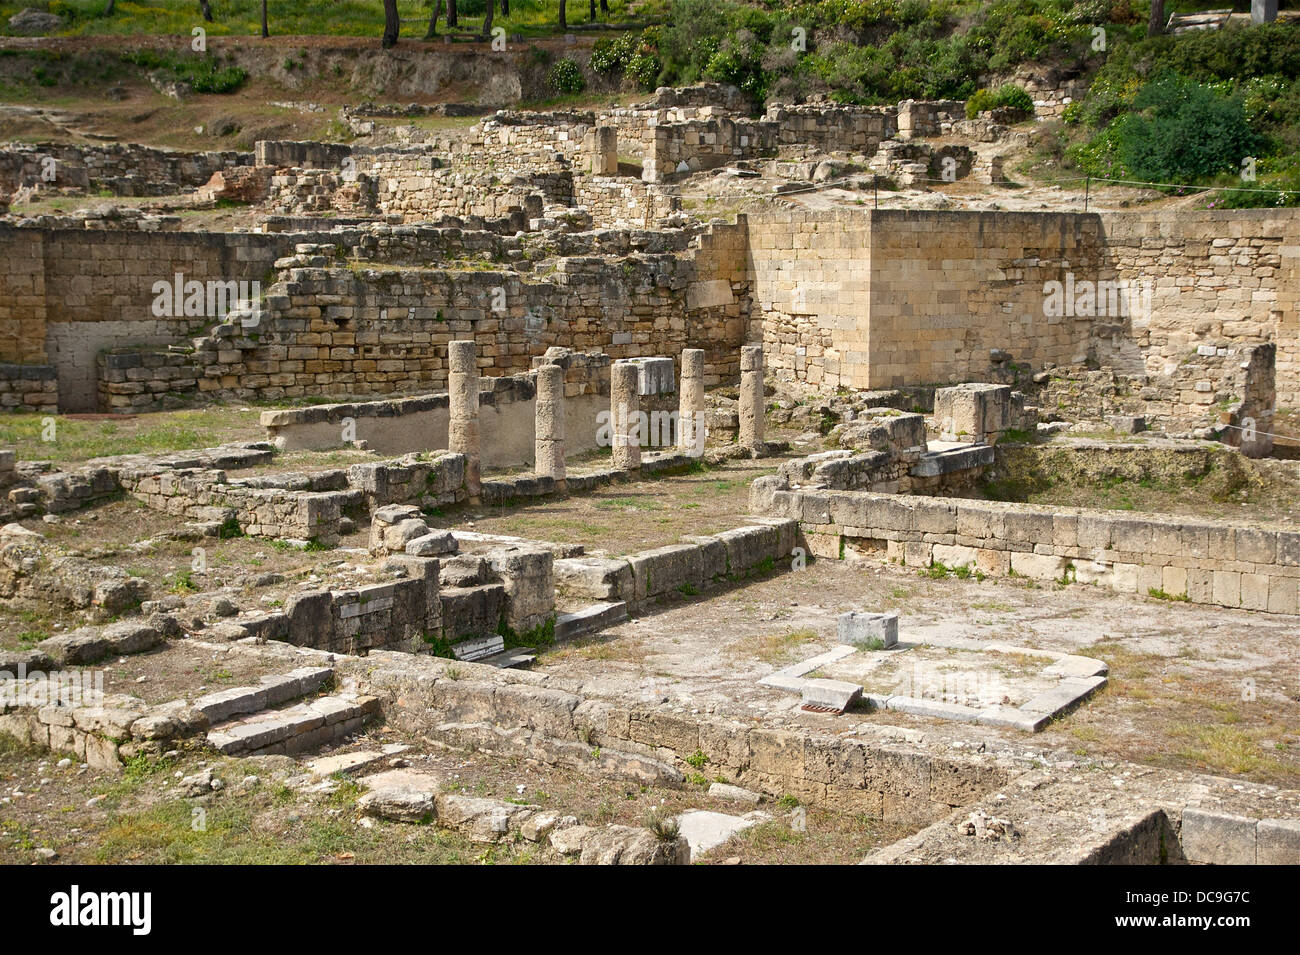 ancient city of Kameiros, 3rd century BCE, island of Rhodes, Greece. Stock Photo